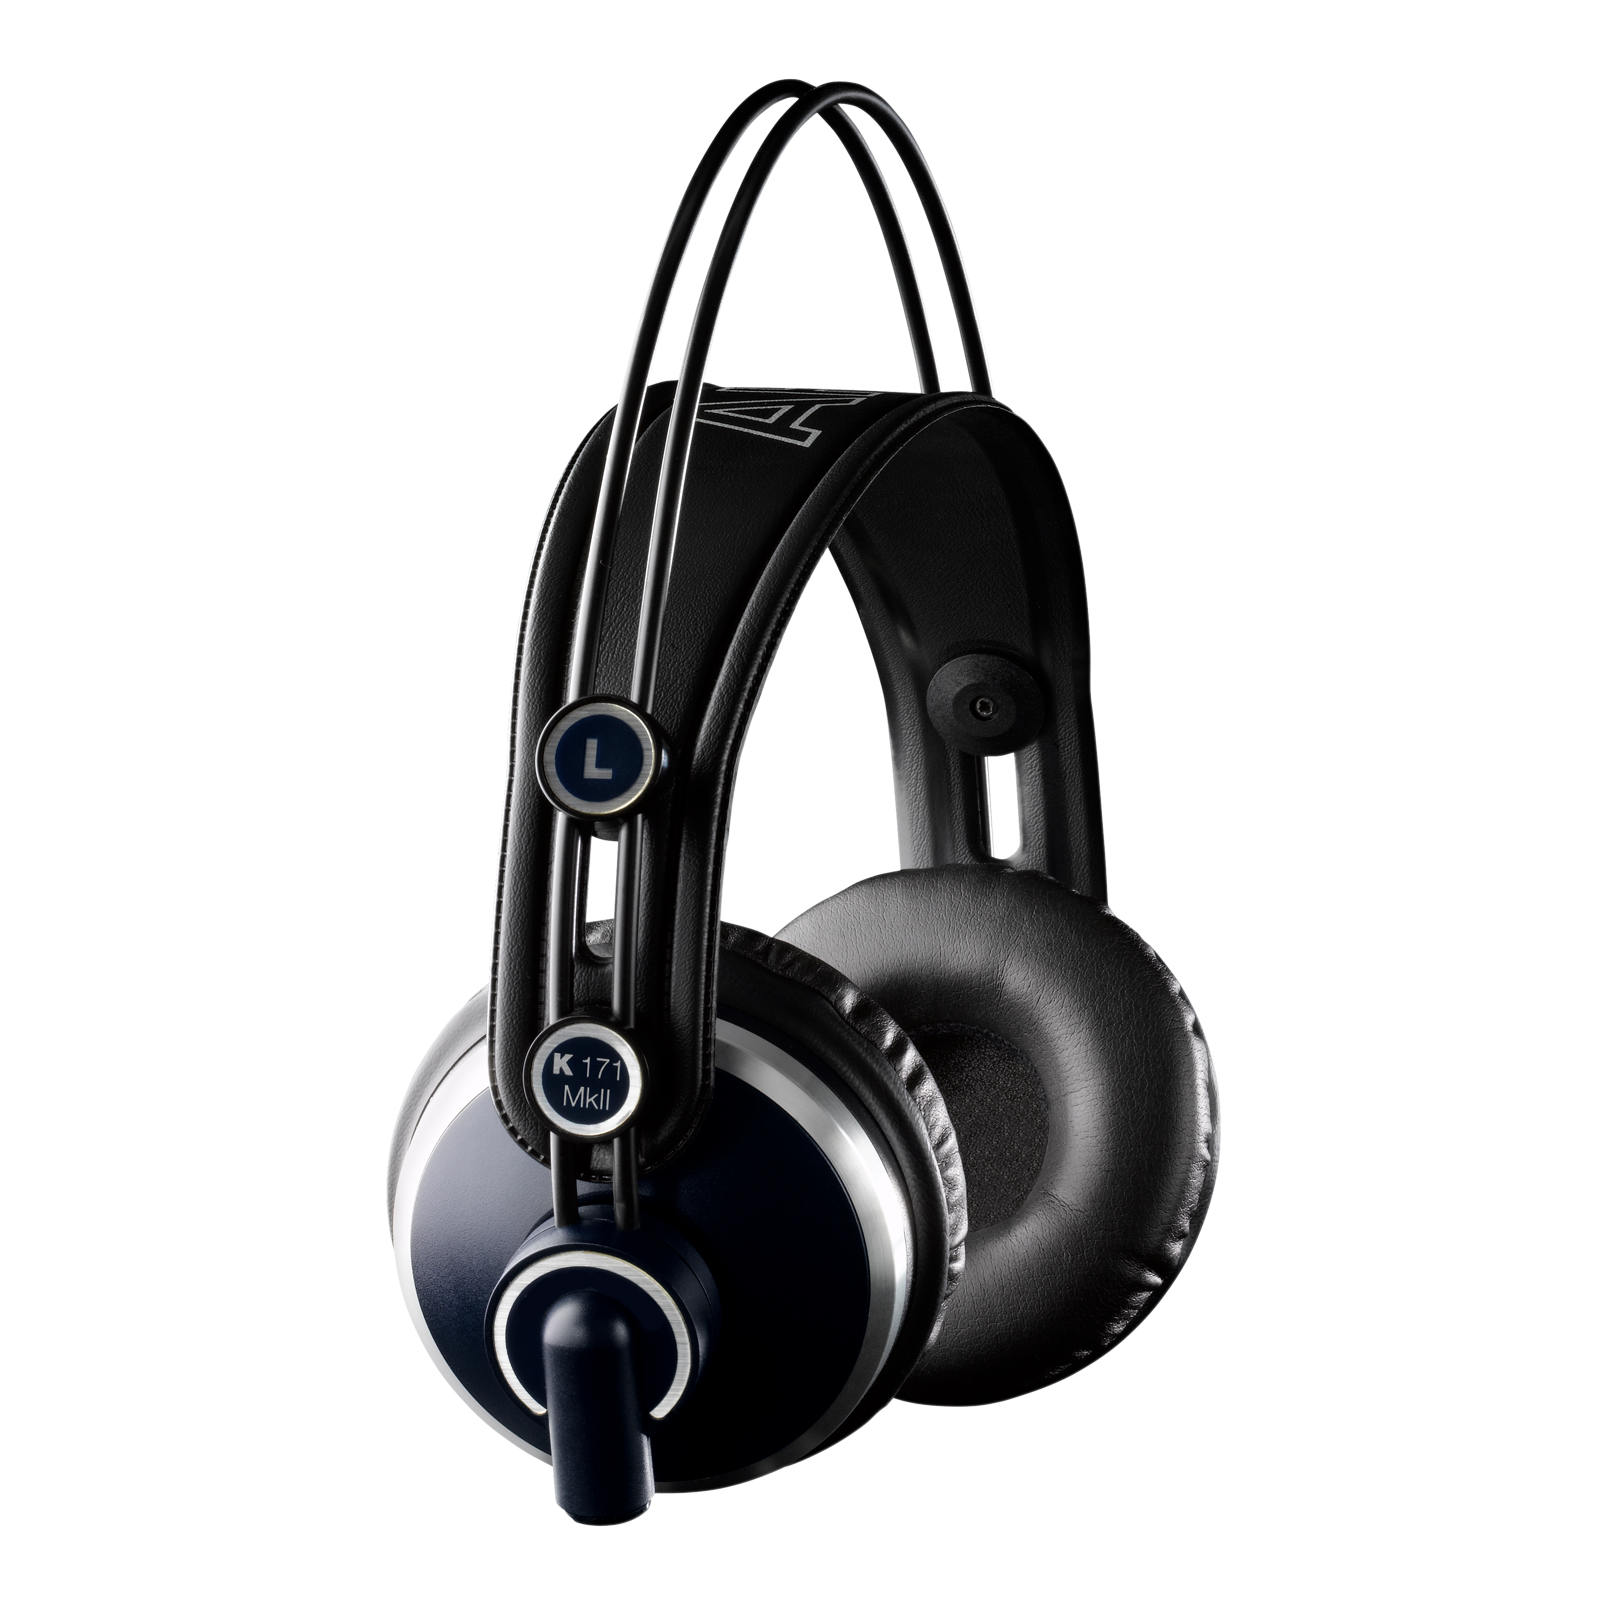 K171 MKII (discontinued) - Black - Professional closed-back studio headphones - Hero